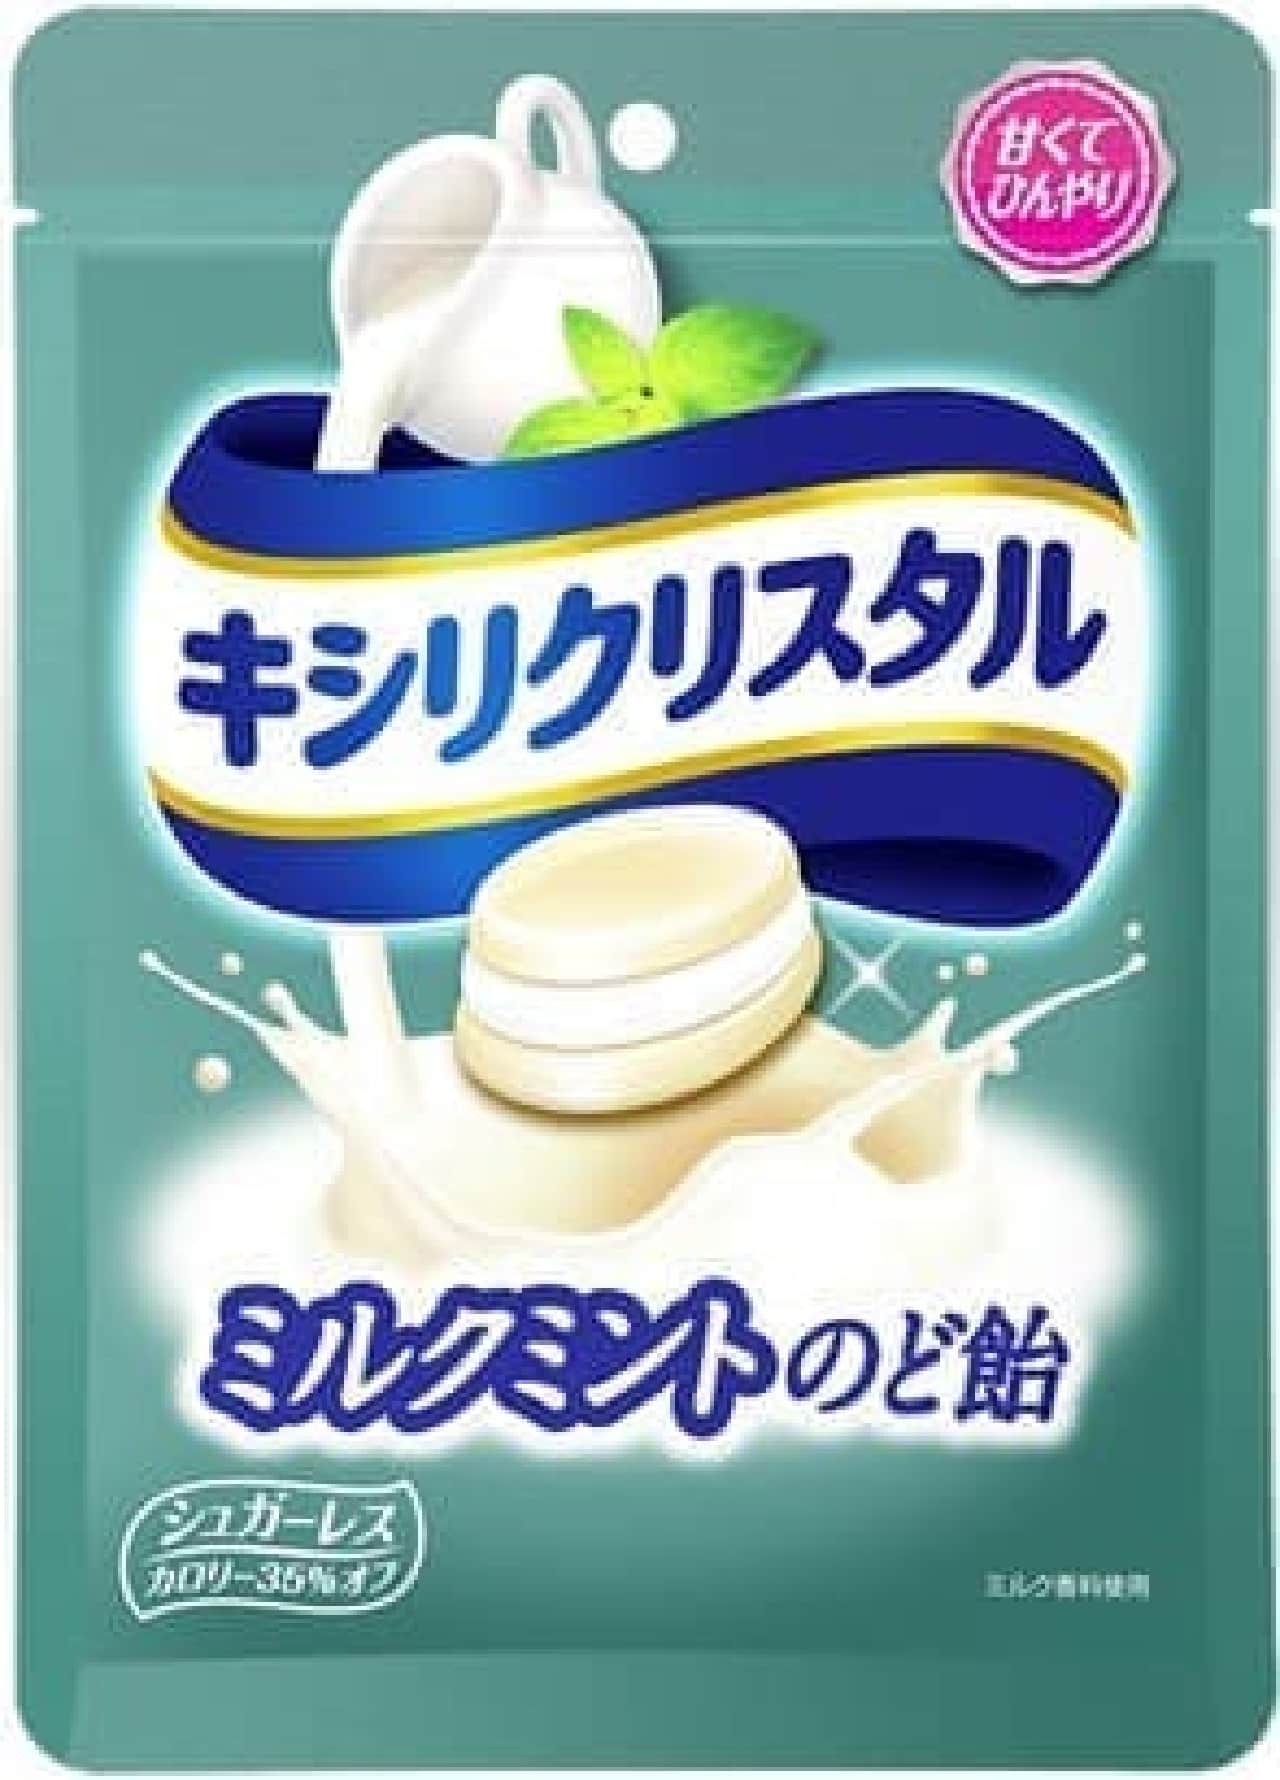 "Kishiri Crystal Milk Mint Throat Candy"